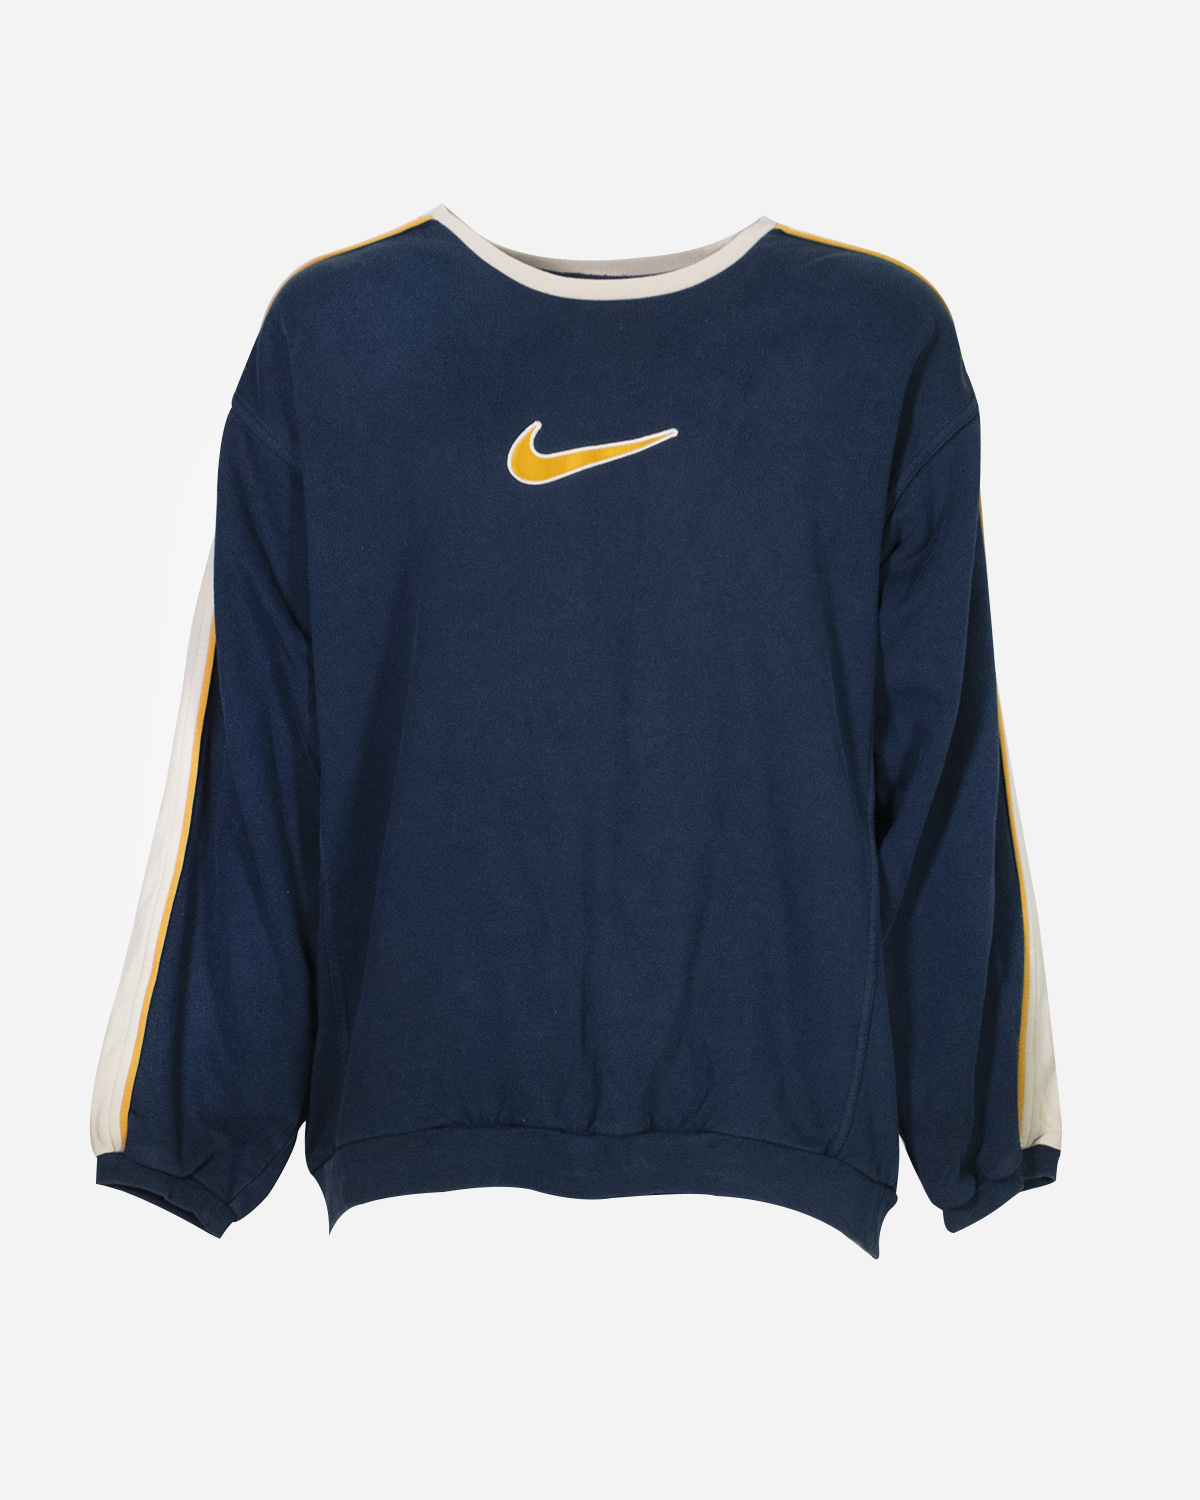 Vintage 90s branded sports sweatshirts: 4 pieces